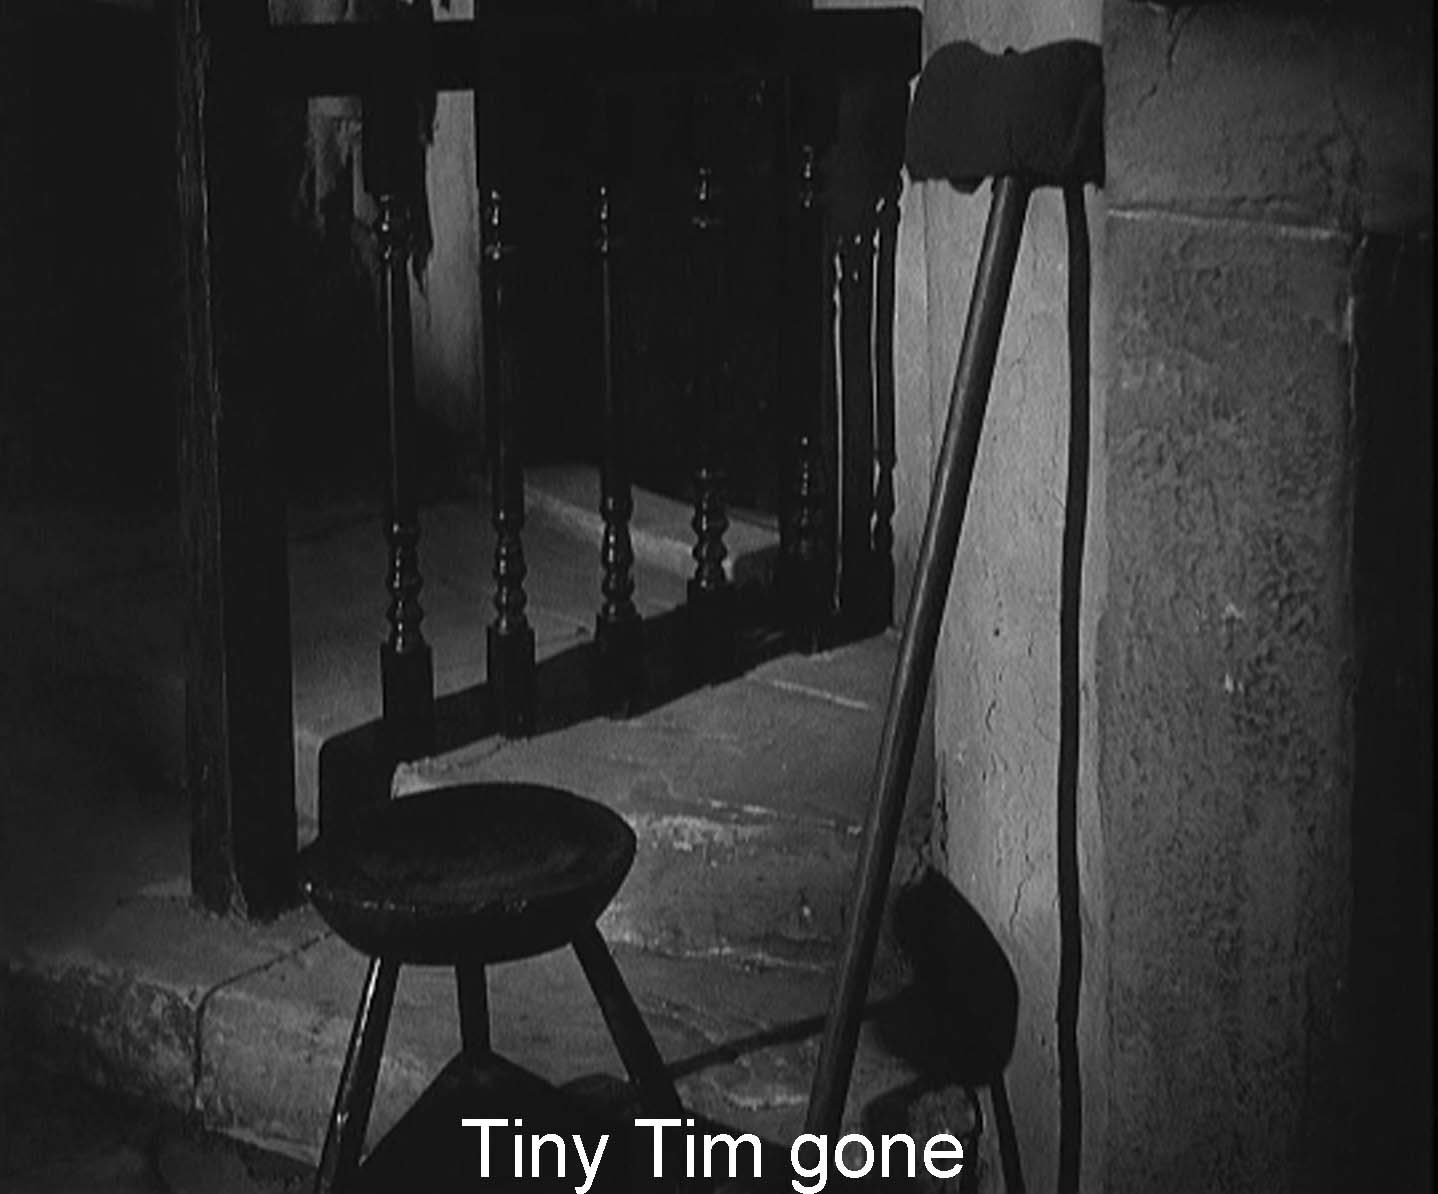 Tiny Tim gone